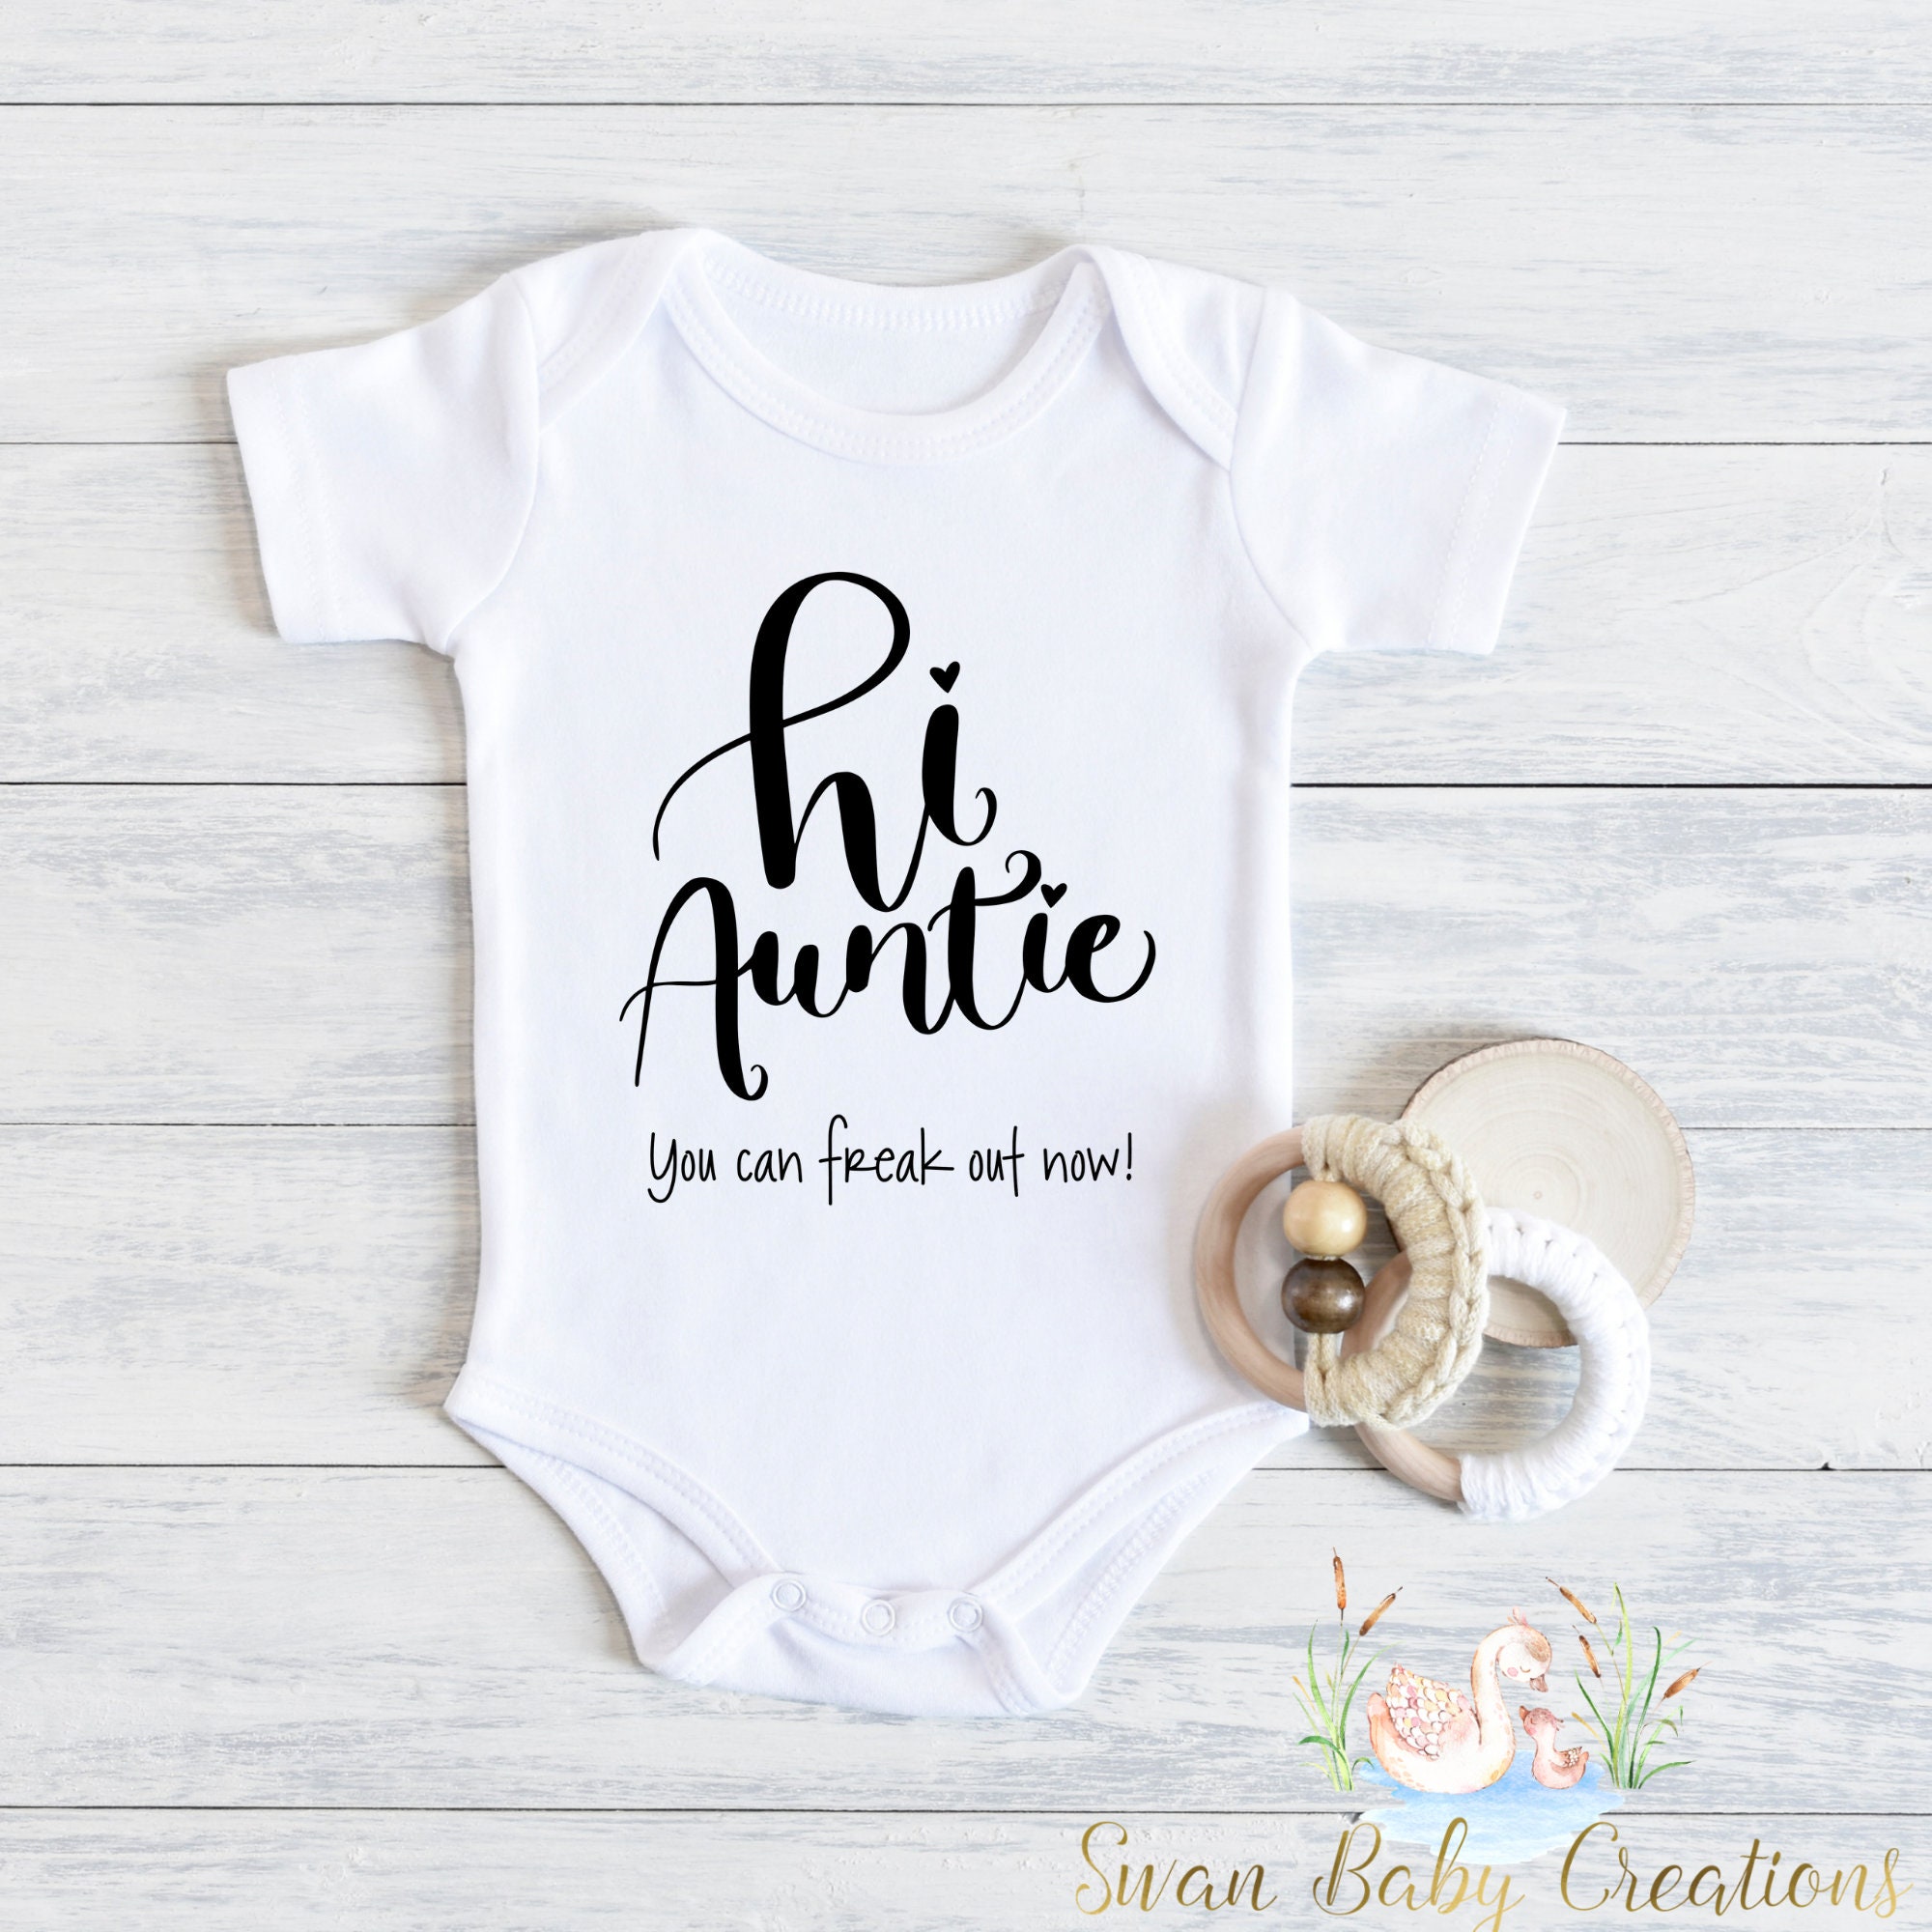 Sorpresa Vas a Ser Tia Hola Tia Baby Pregnancy Announcement Baby Auntie  Baby Tia Baby Baby Shower Gift Auntie 